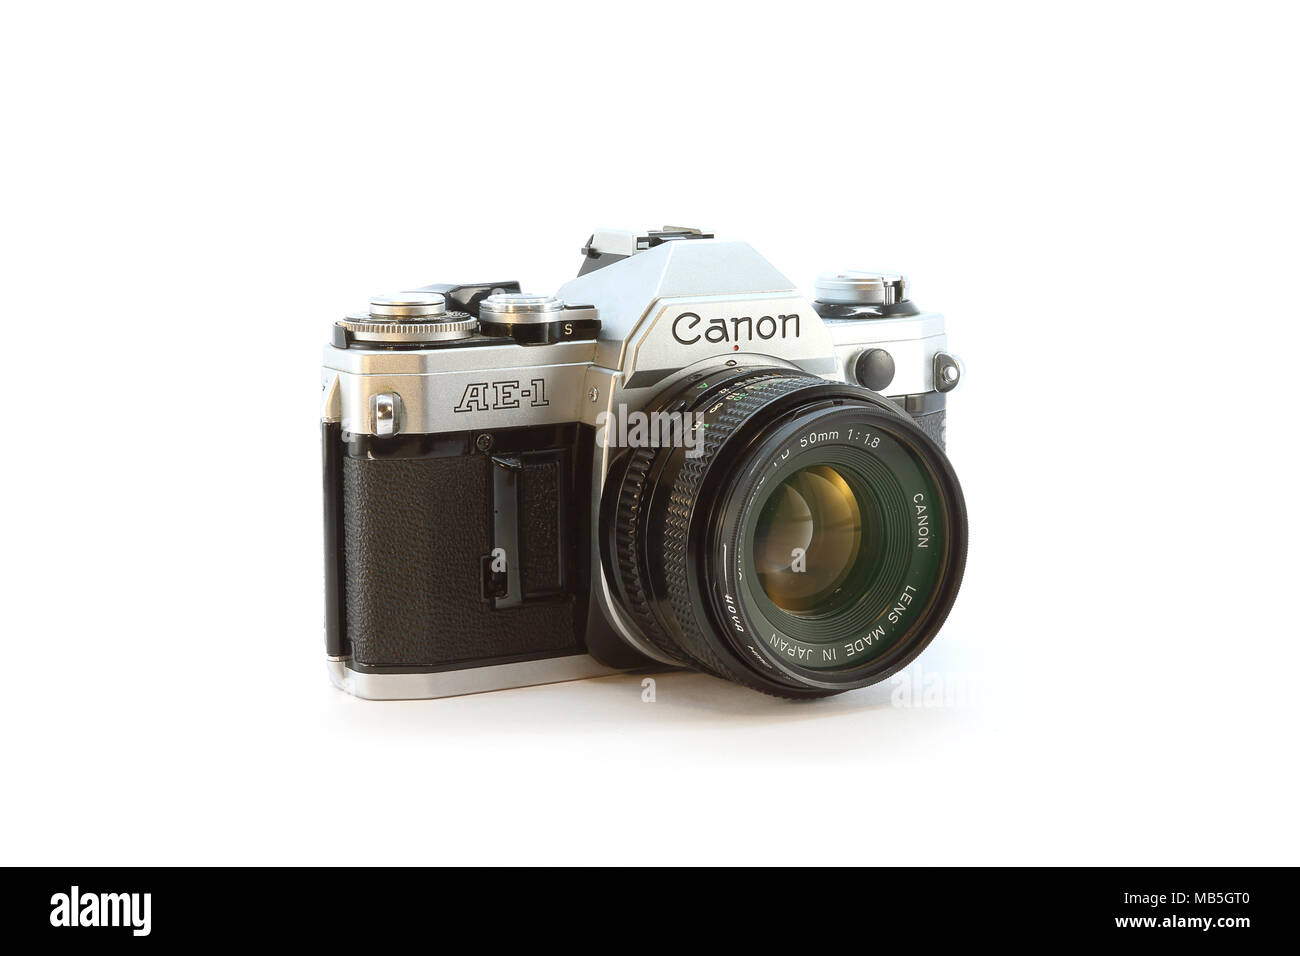 Canon AE-1 camera on white background Stock Photo